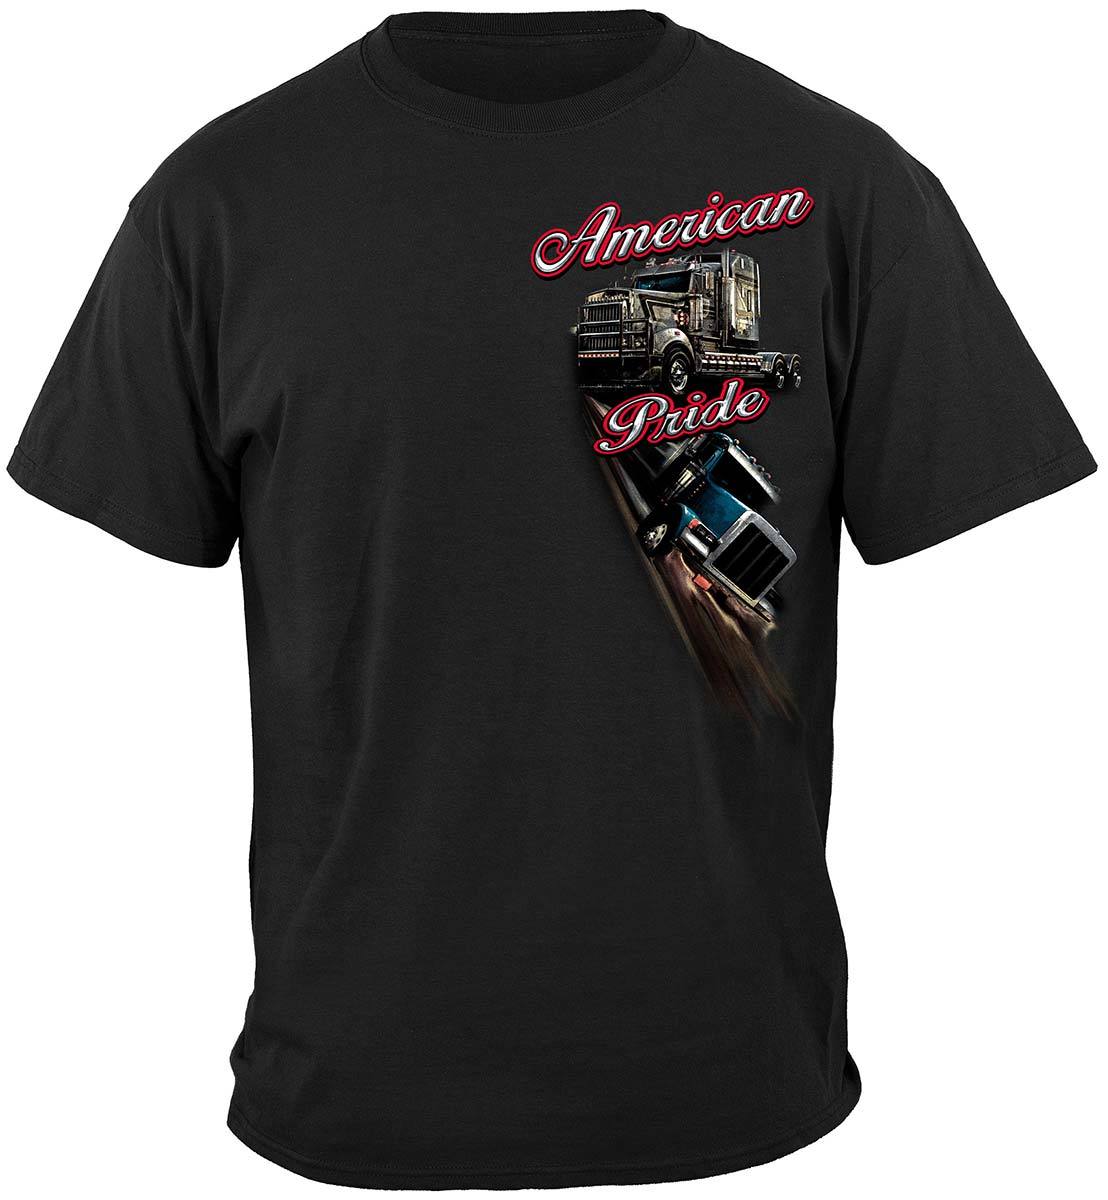 Trucker American Pride Premium Hooded Sweat Shirt